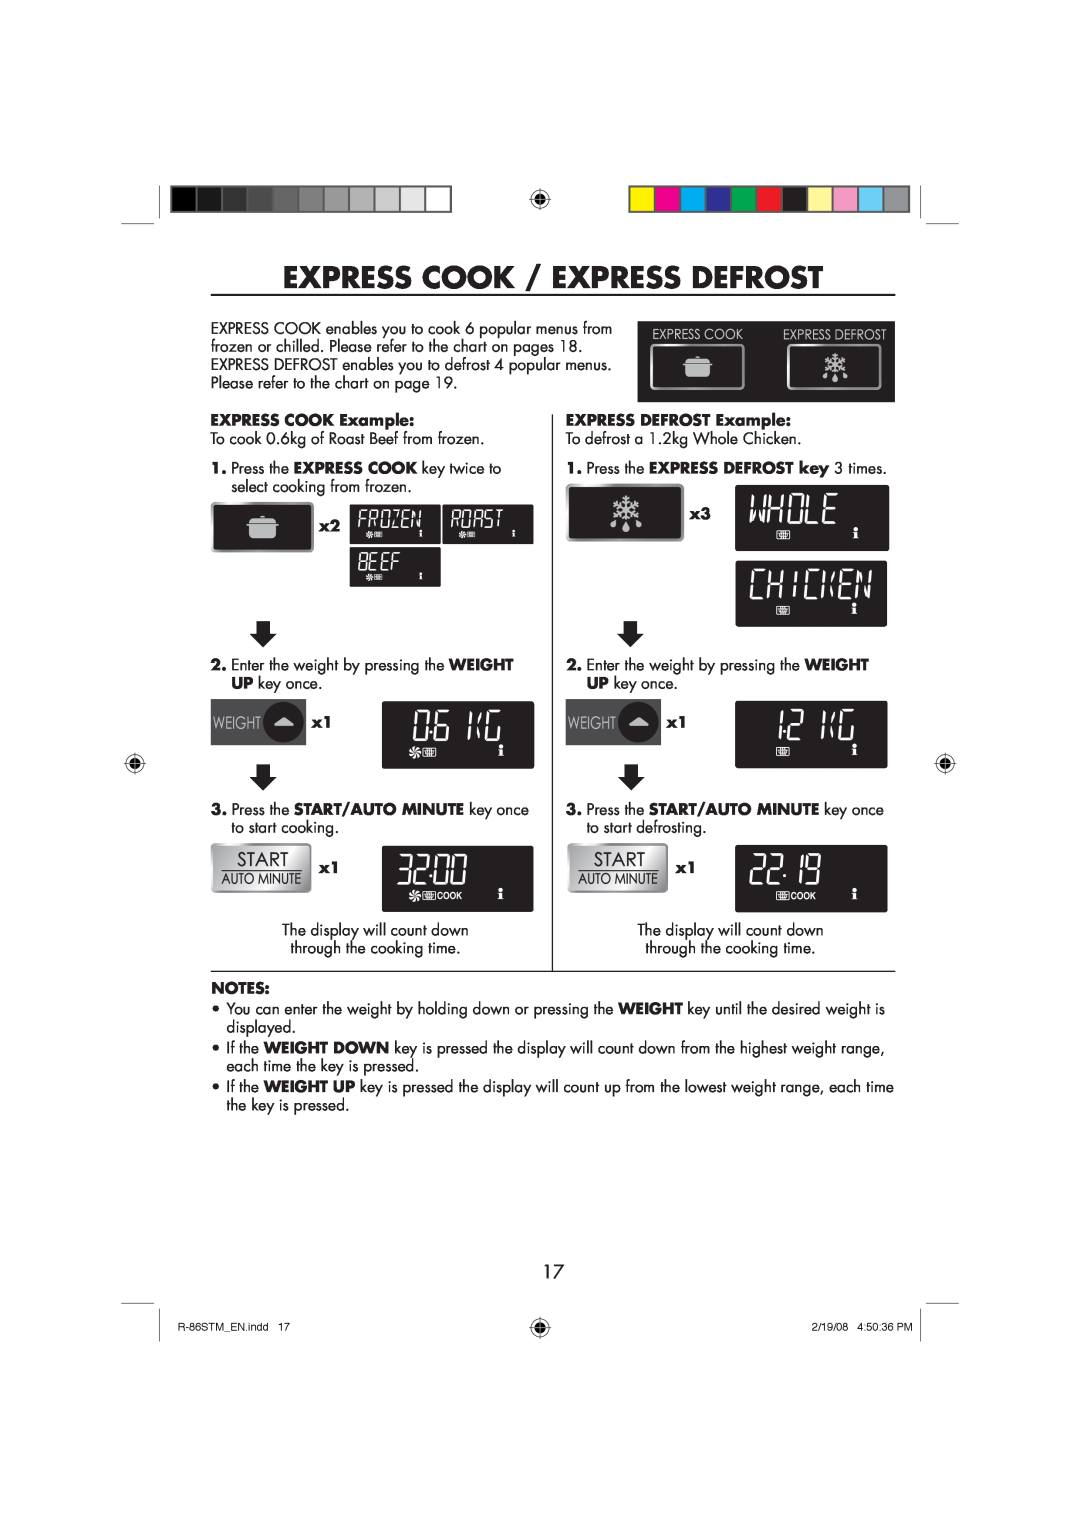 Sharp R-86STM manual Express Cook / Express Defrost, EXPRESS COOK Example, EXPRESS DEFROST Example 